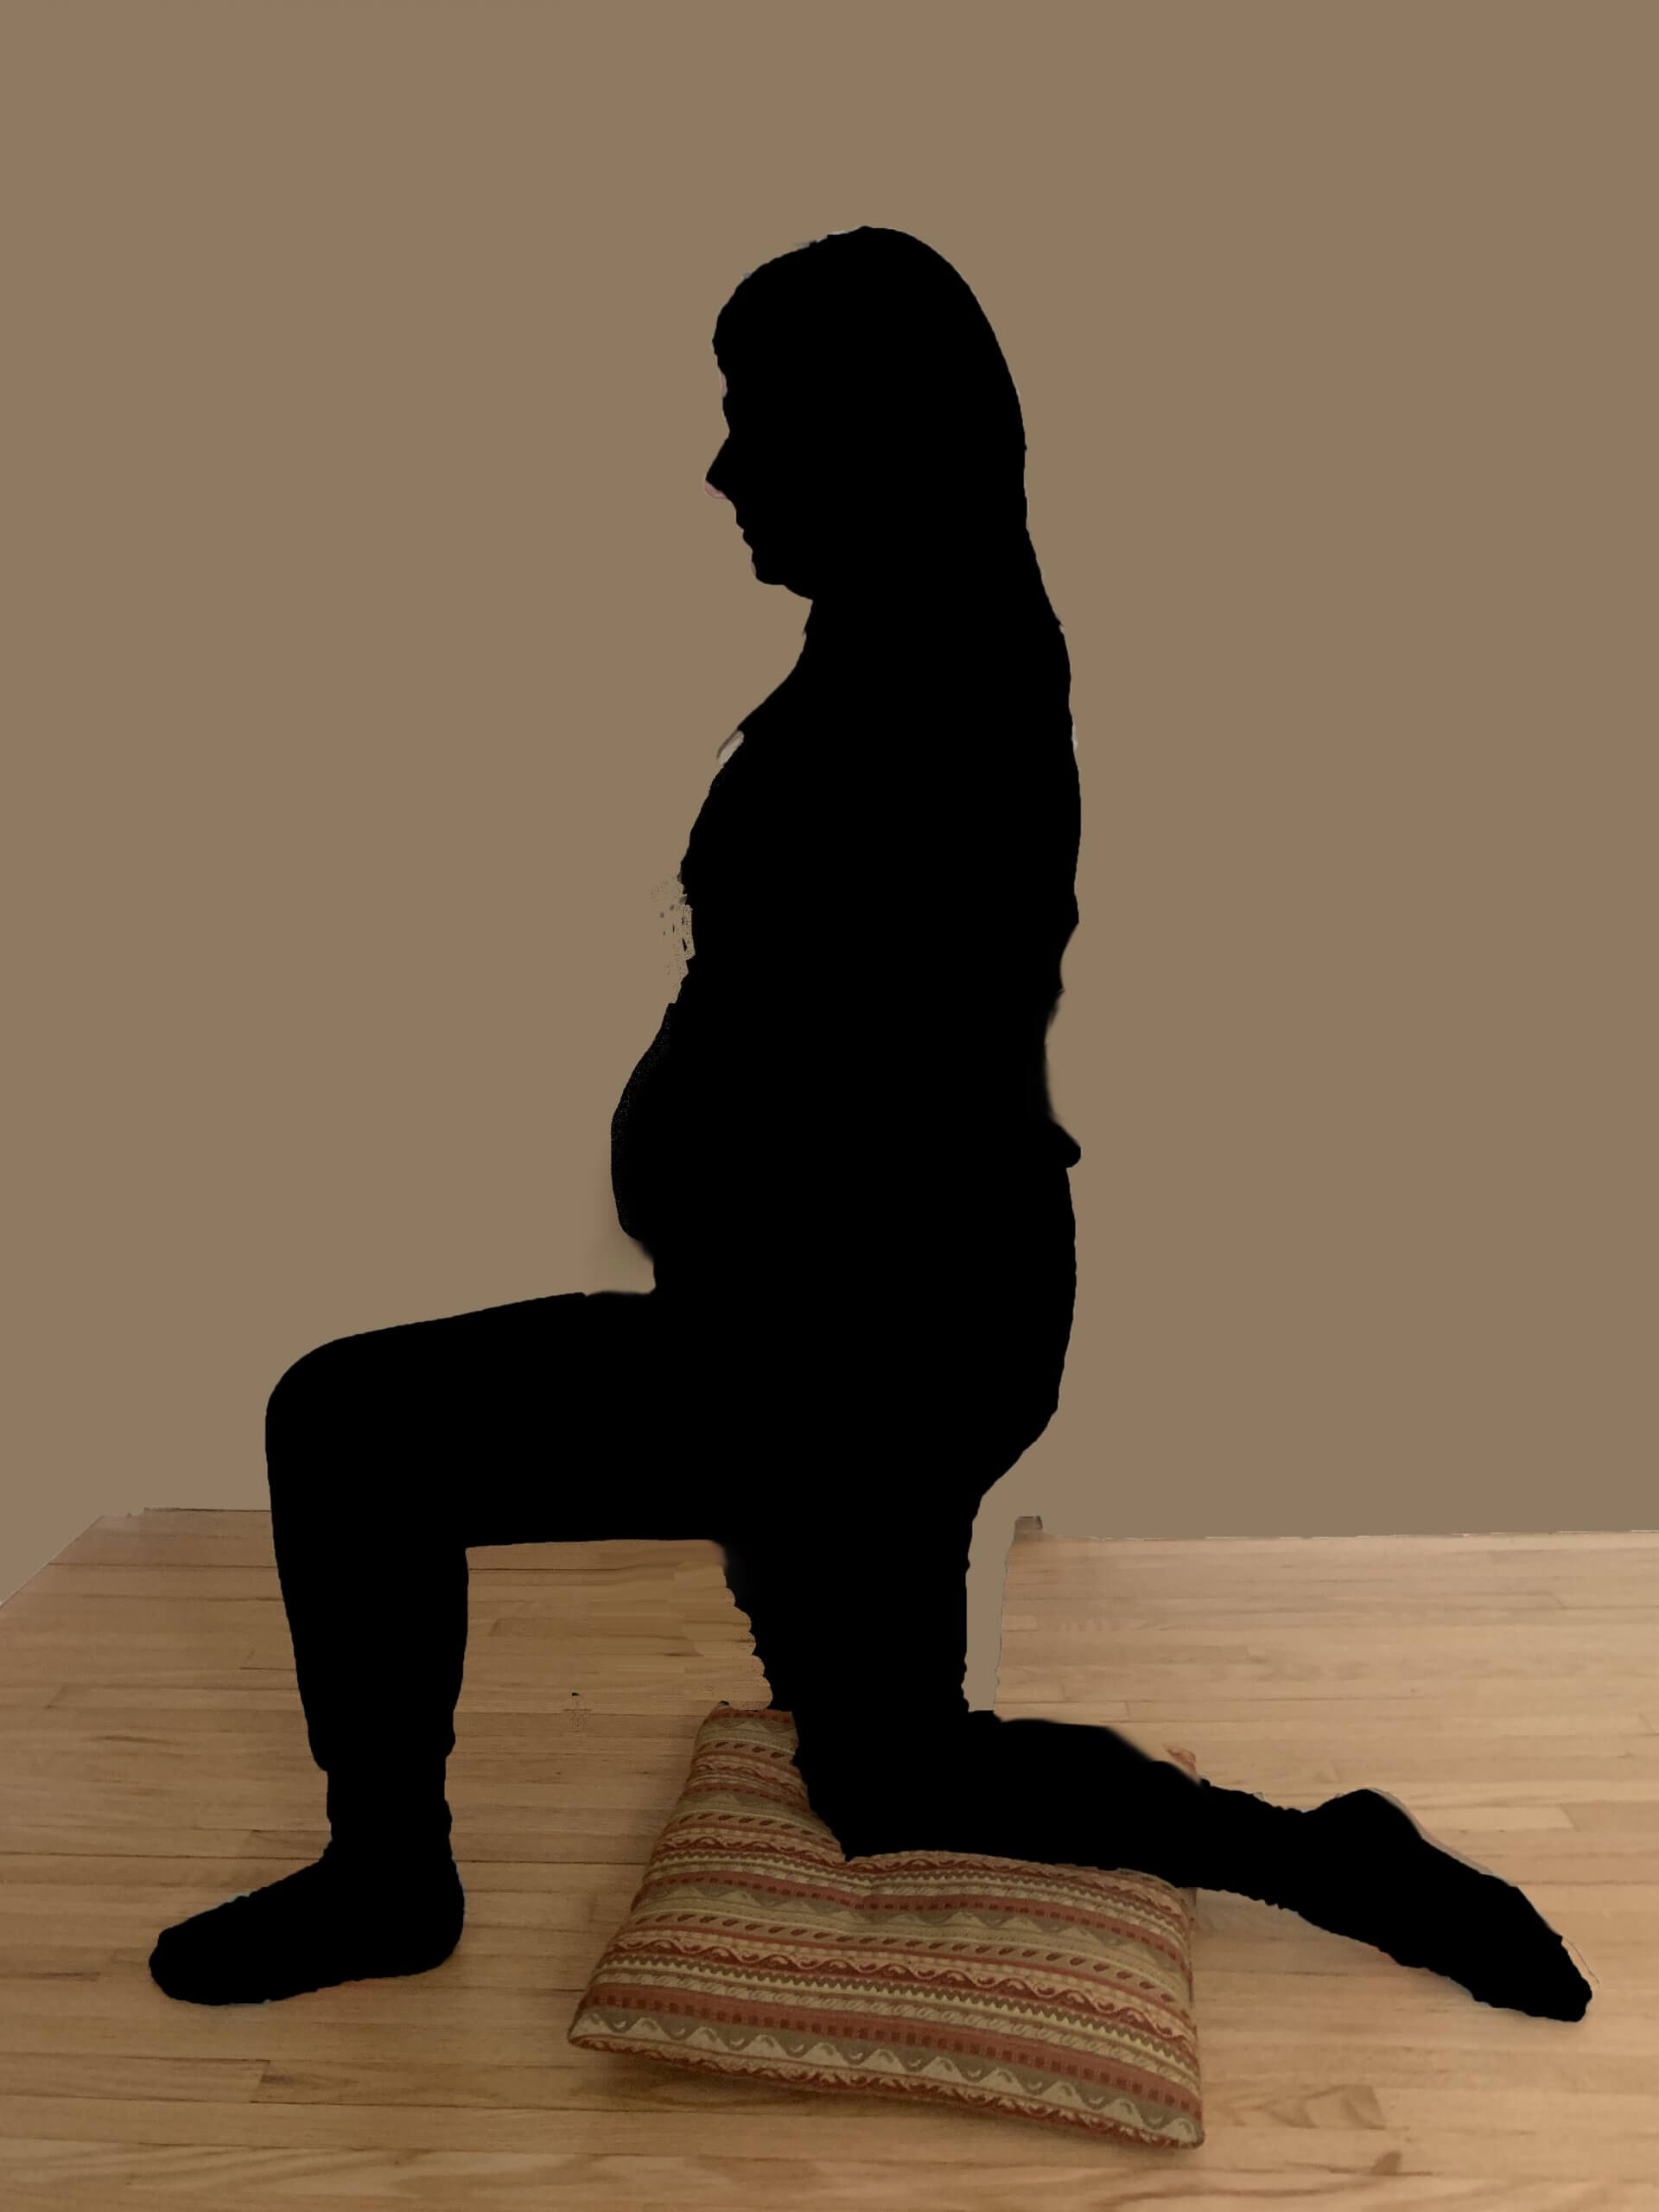 Buy Prenatal Yoga Poster for 2nd Trimester DIGITAL DOWNLOAD